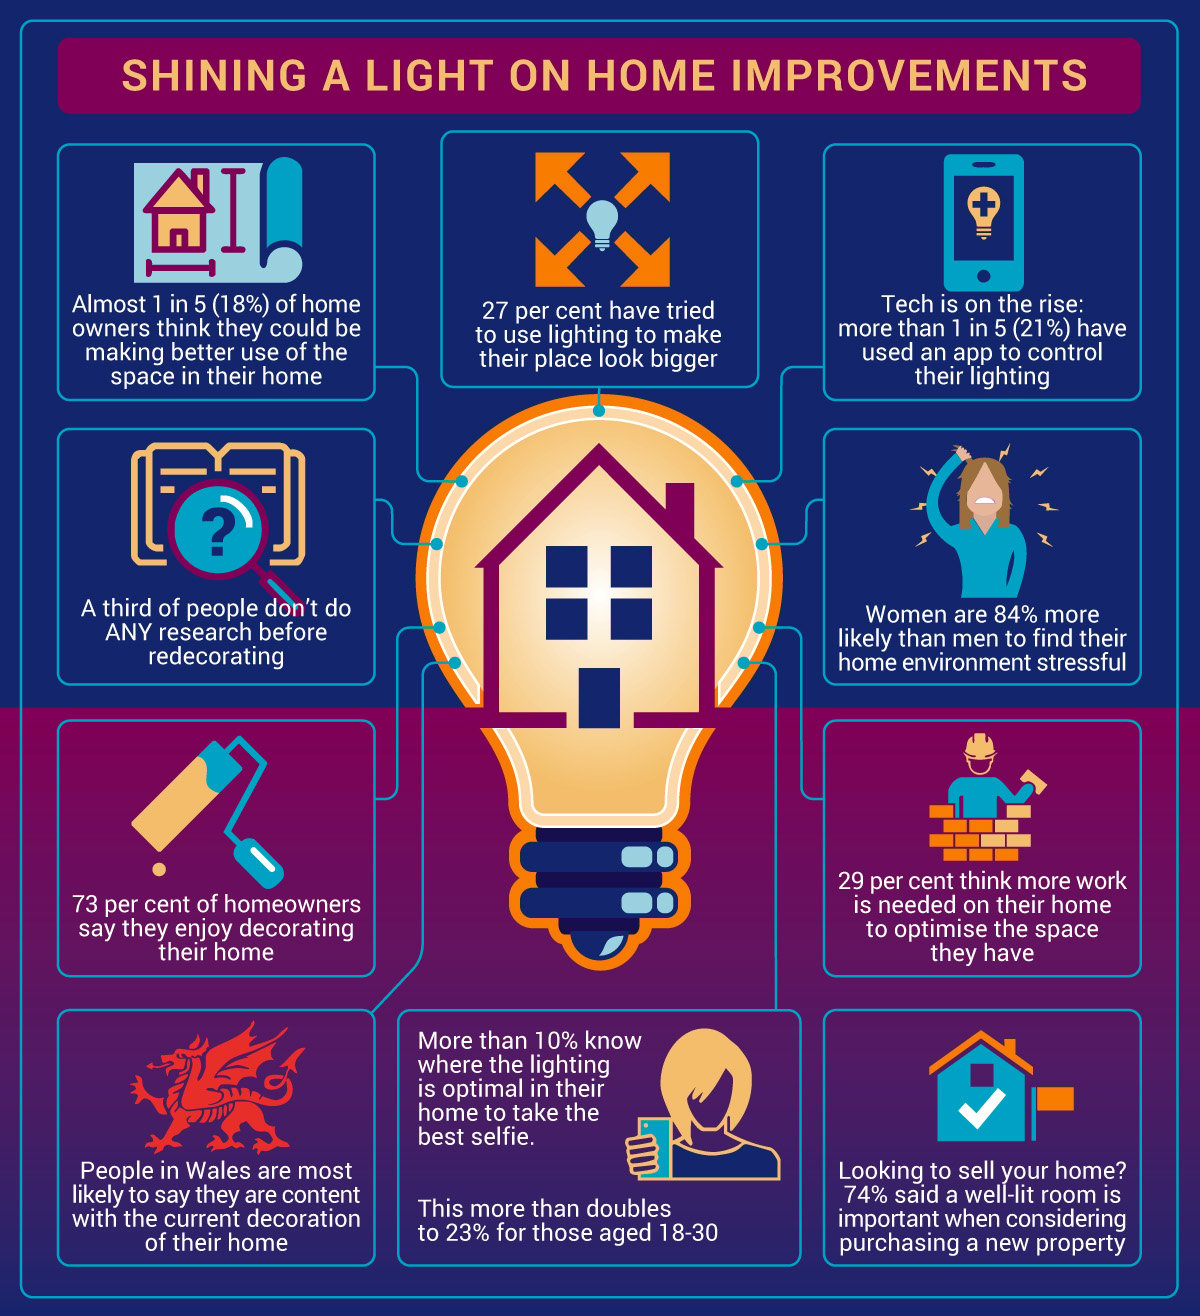 David Village Lighting shining a light on home improvements survey results